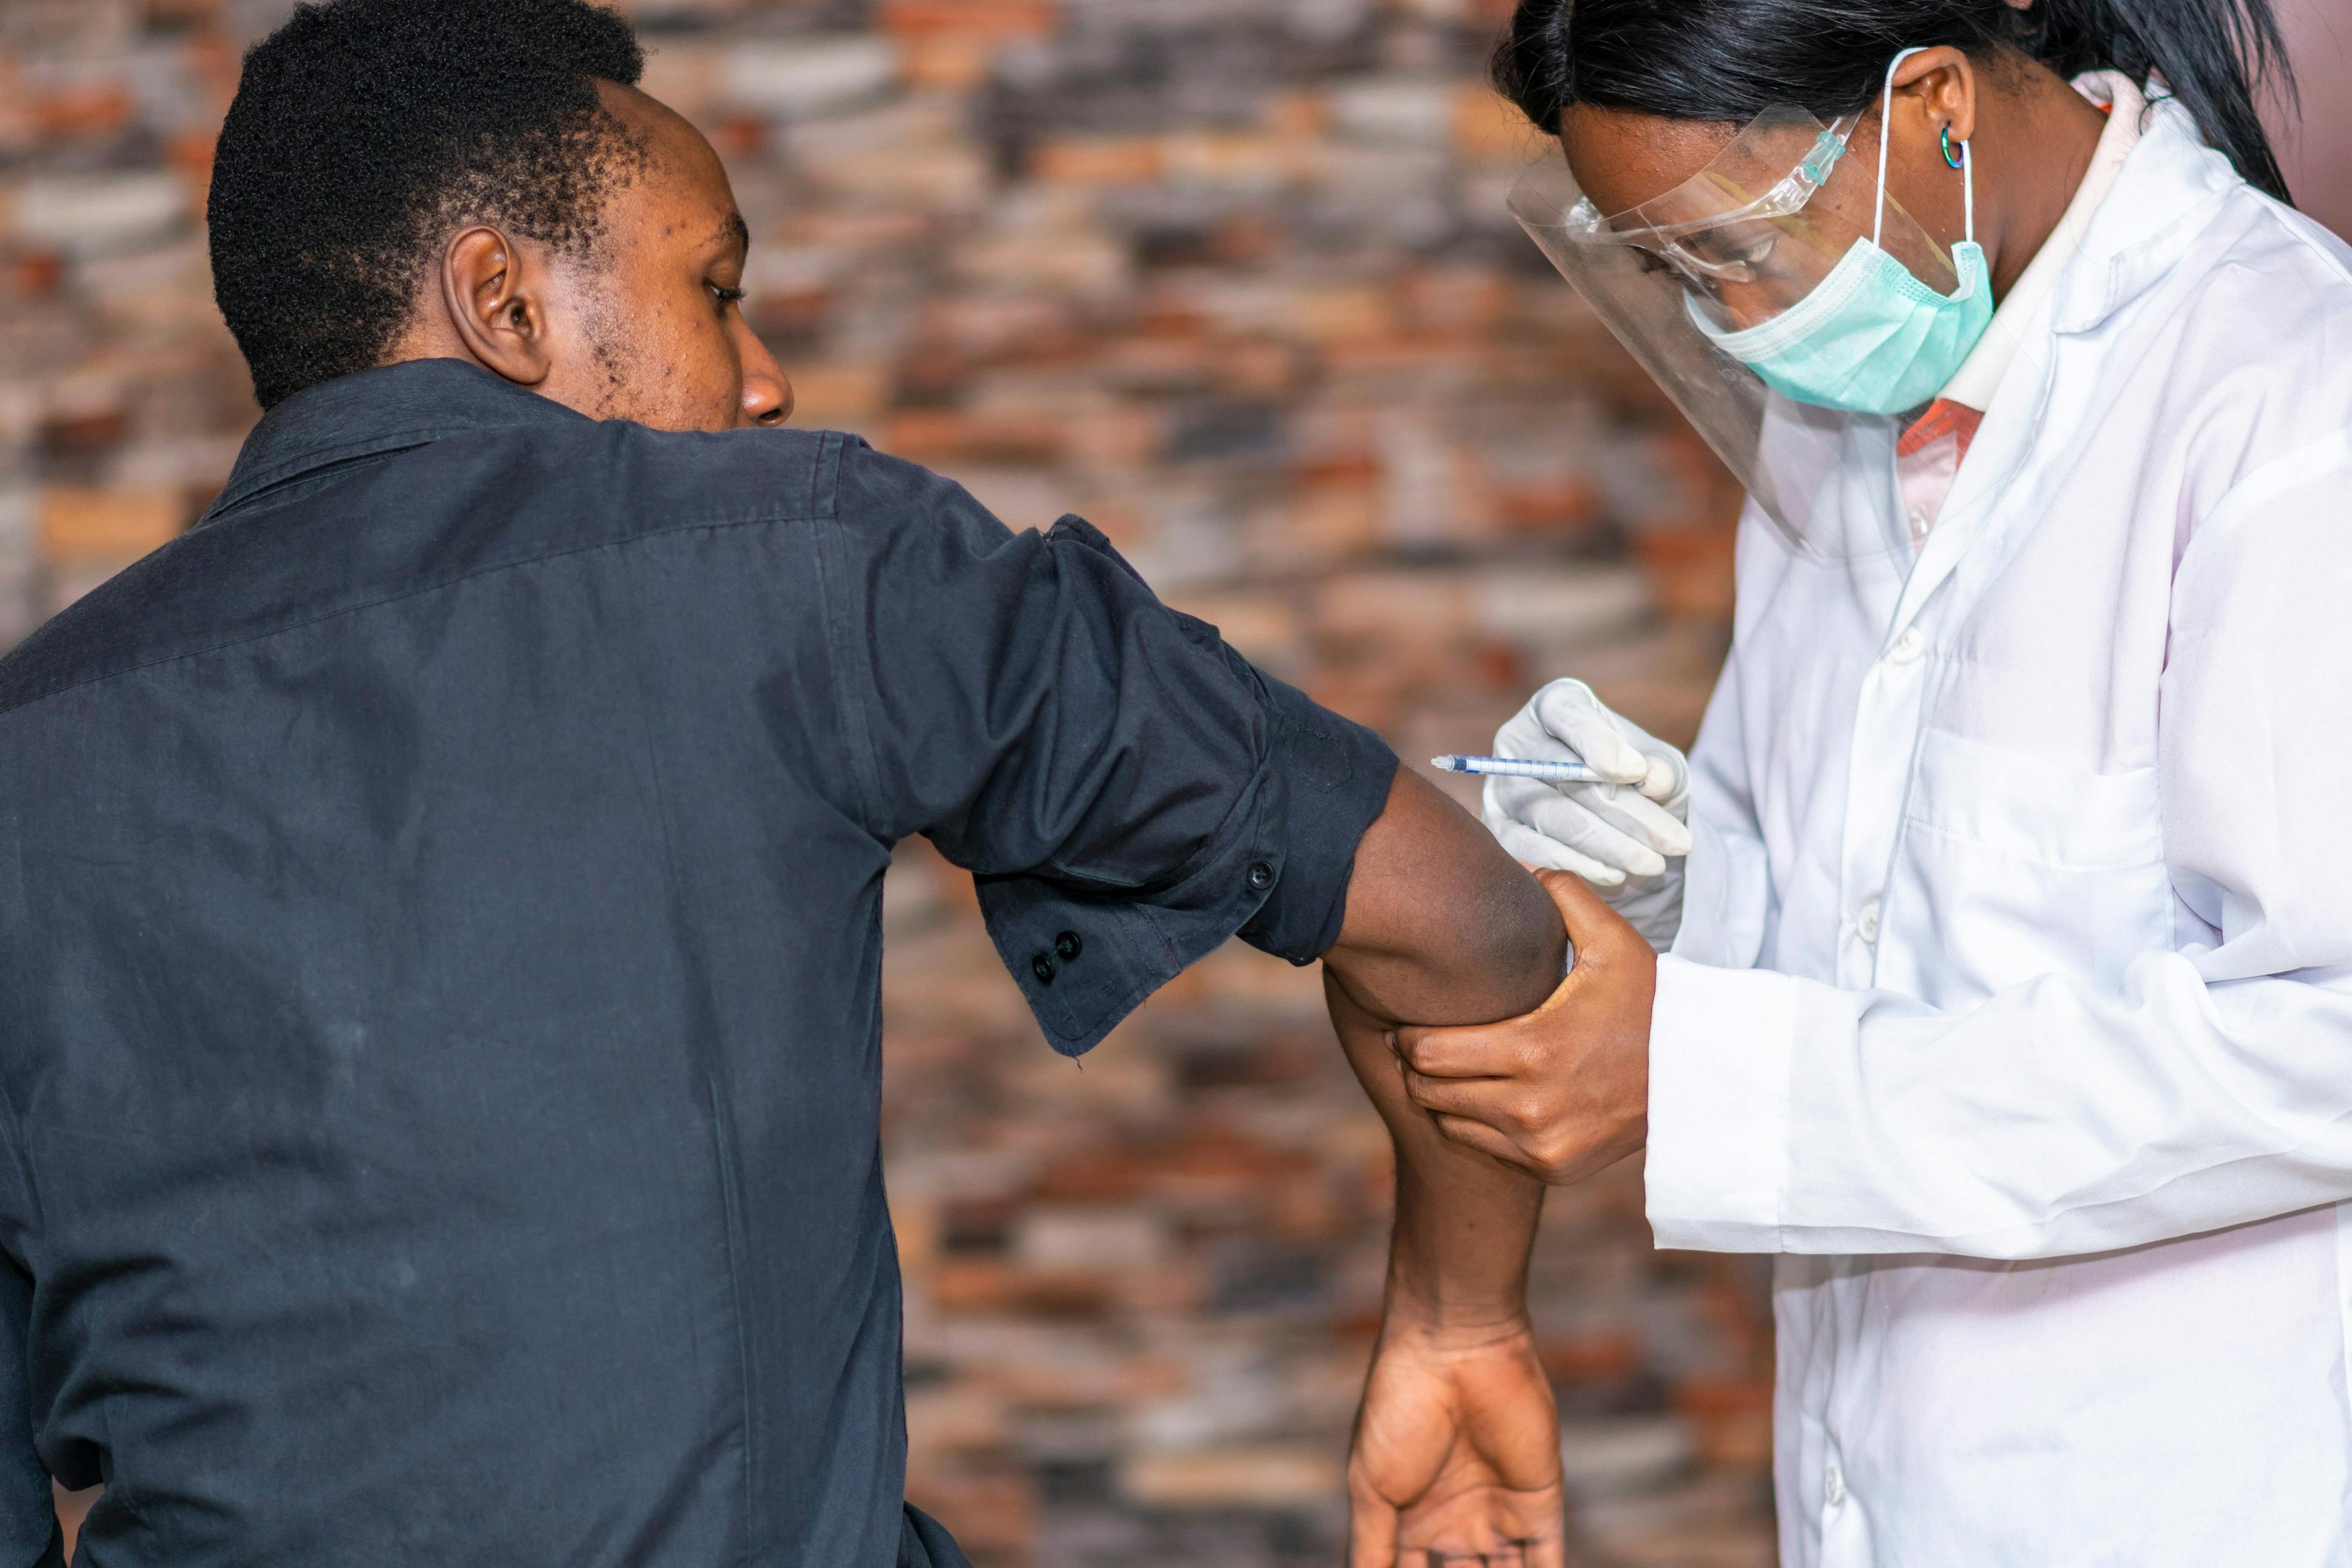 COVID-19 pandemic worsened disparities in healthcare: Survey